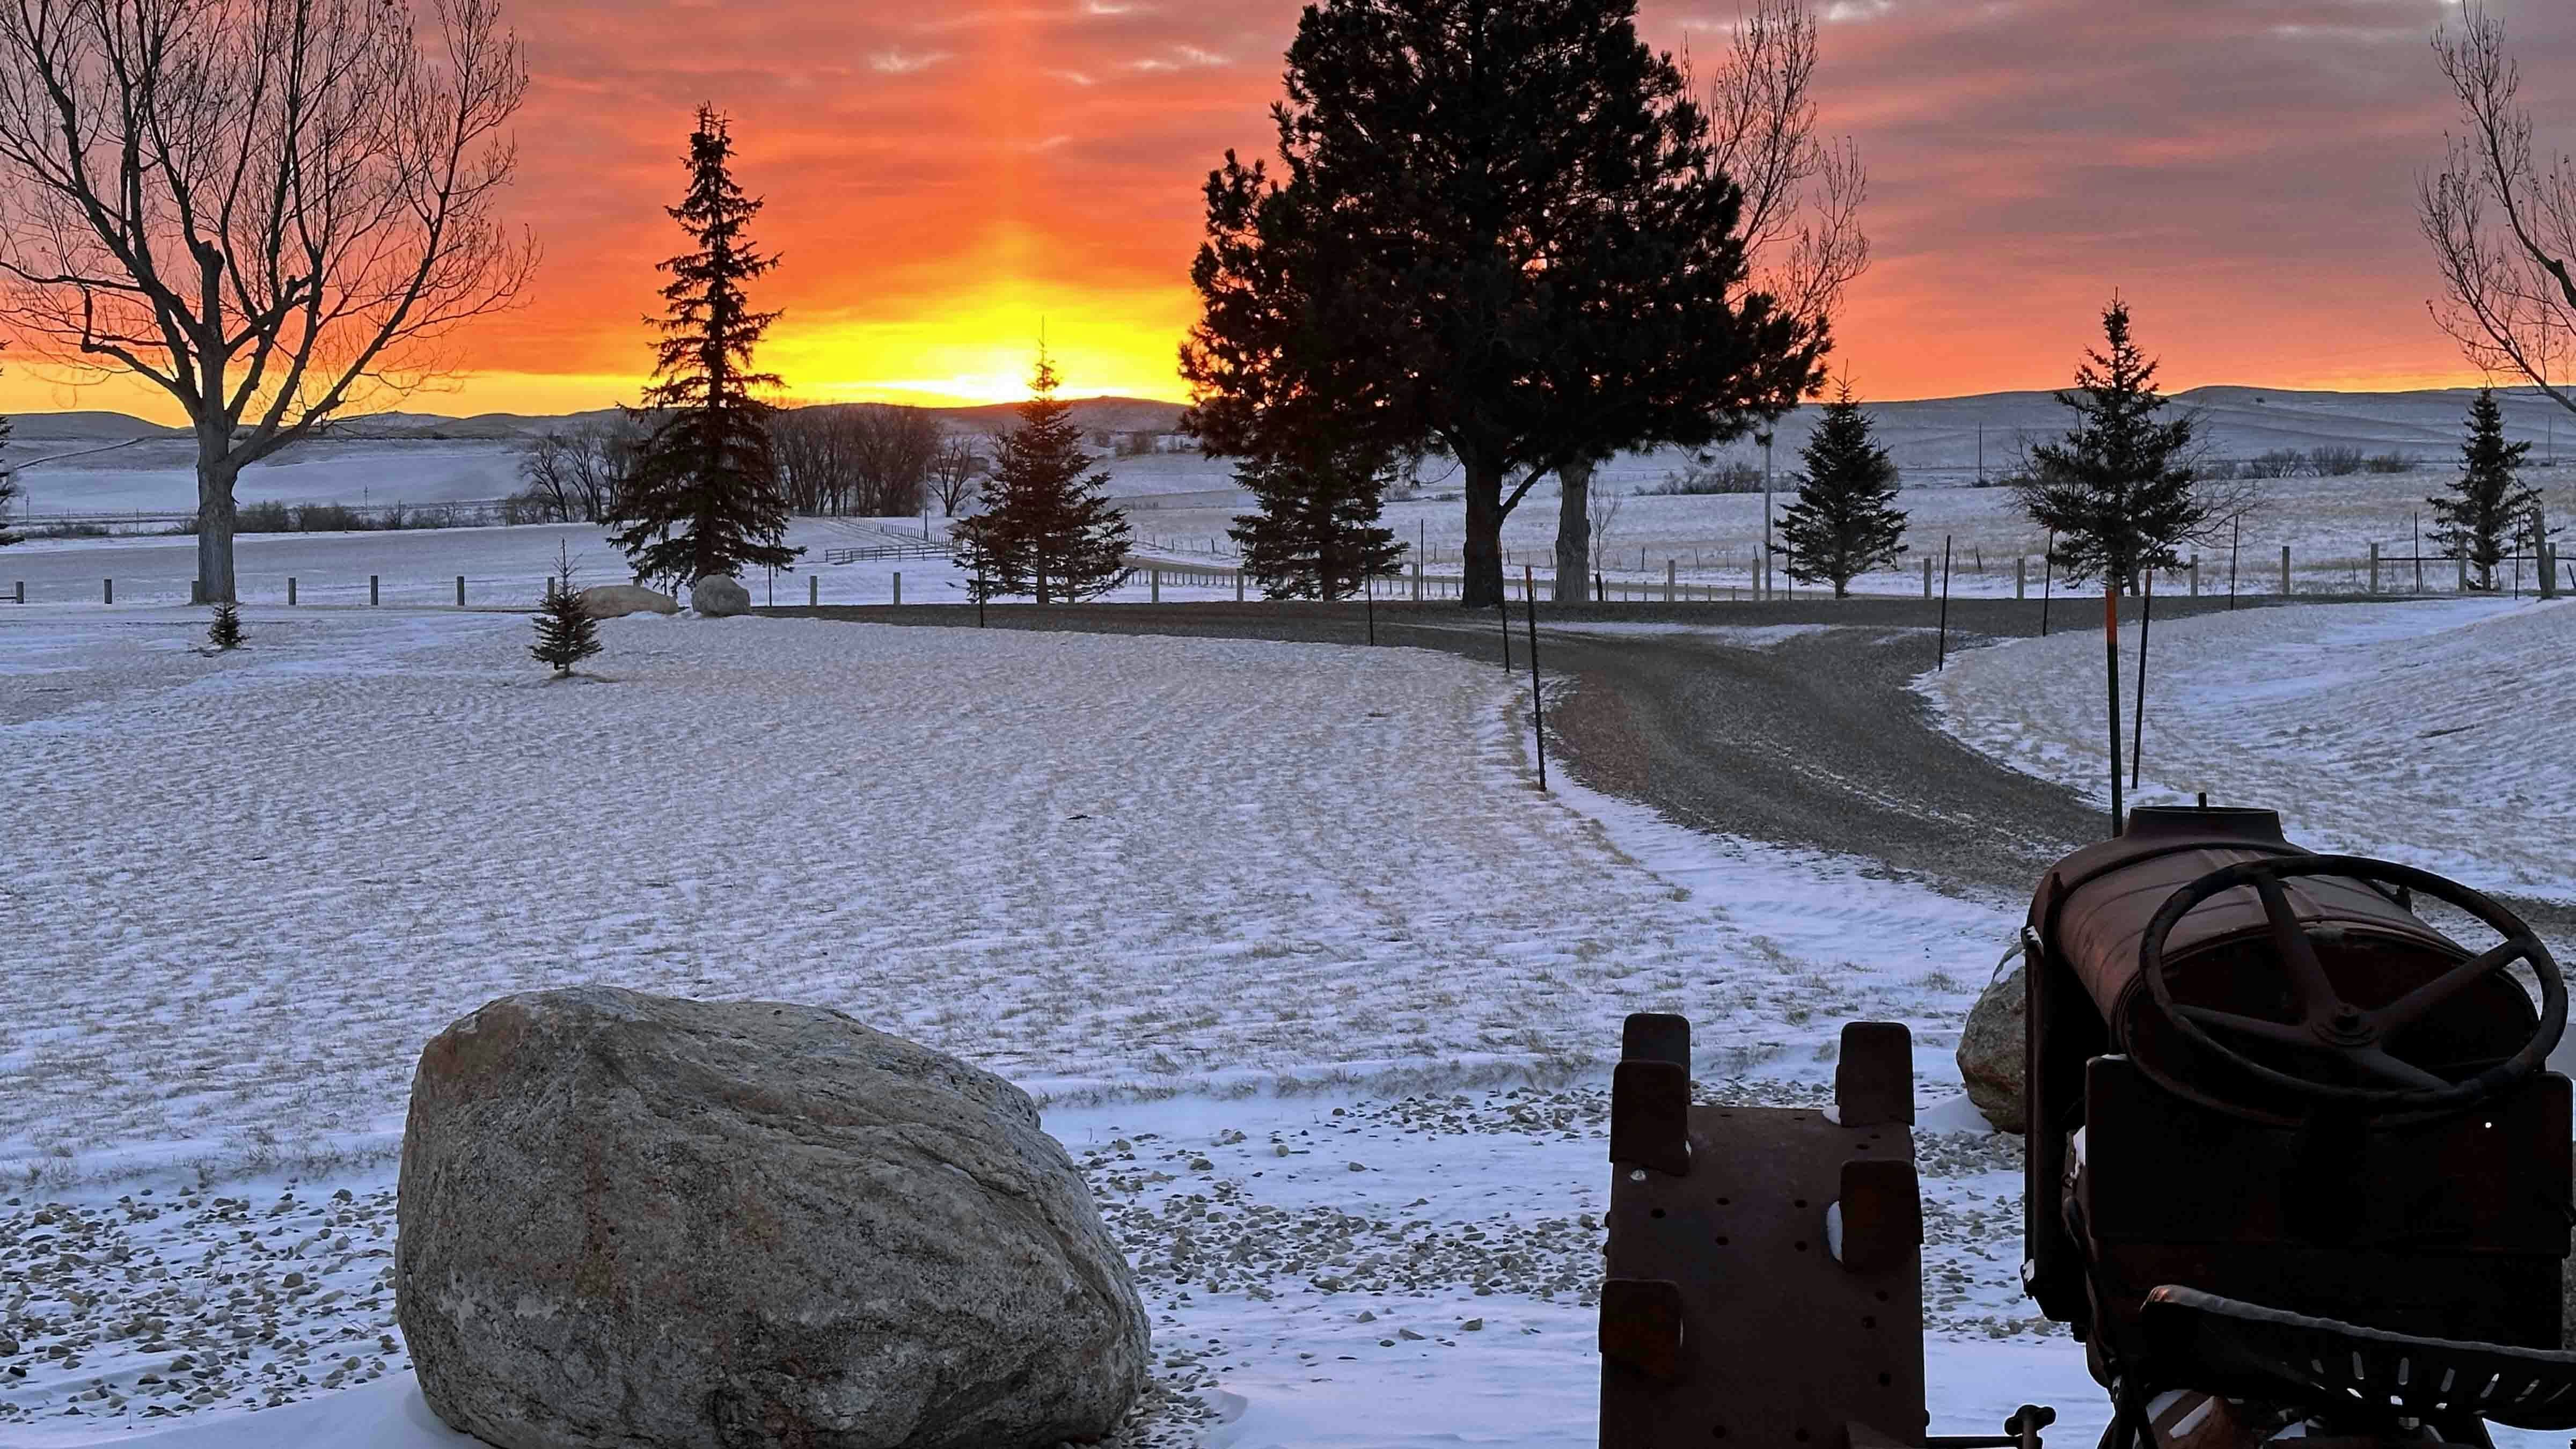 Sunrise on Bird Farm Road in Sheridan, Wyoming.